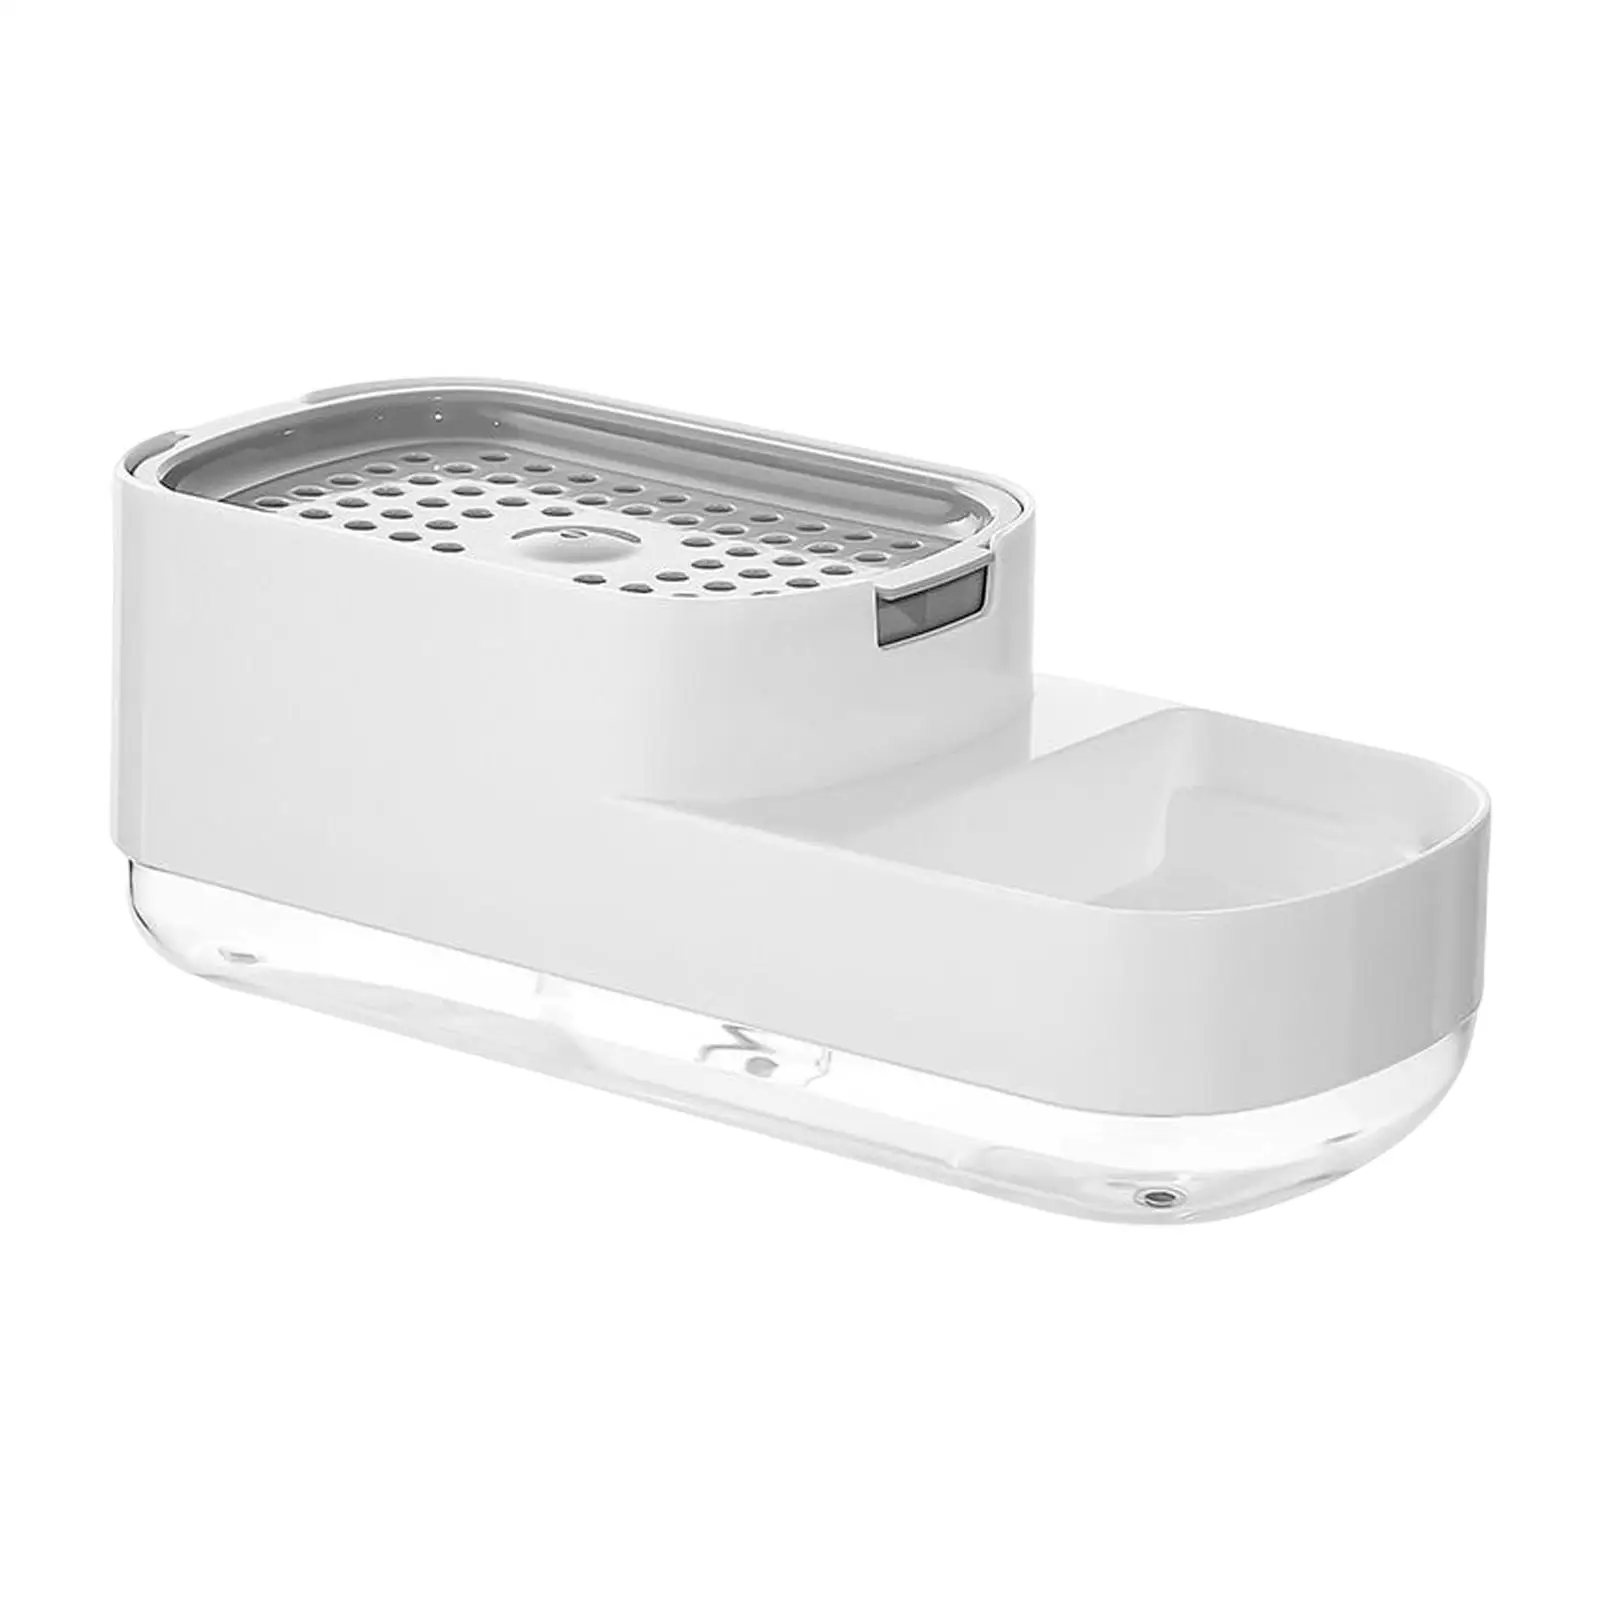 Dish Soap Dispenser with Sponge Holder Countertop Organizer for Bathroom